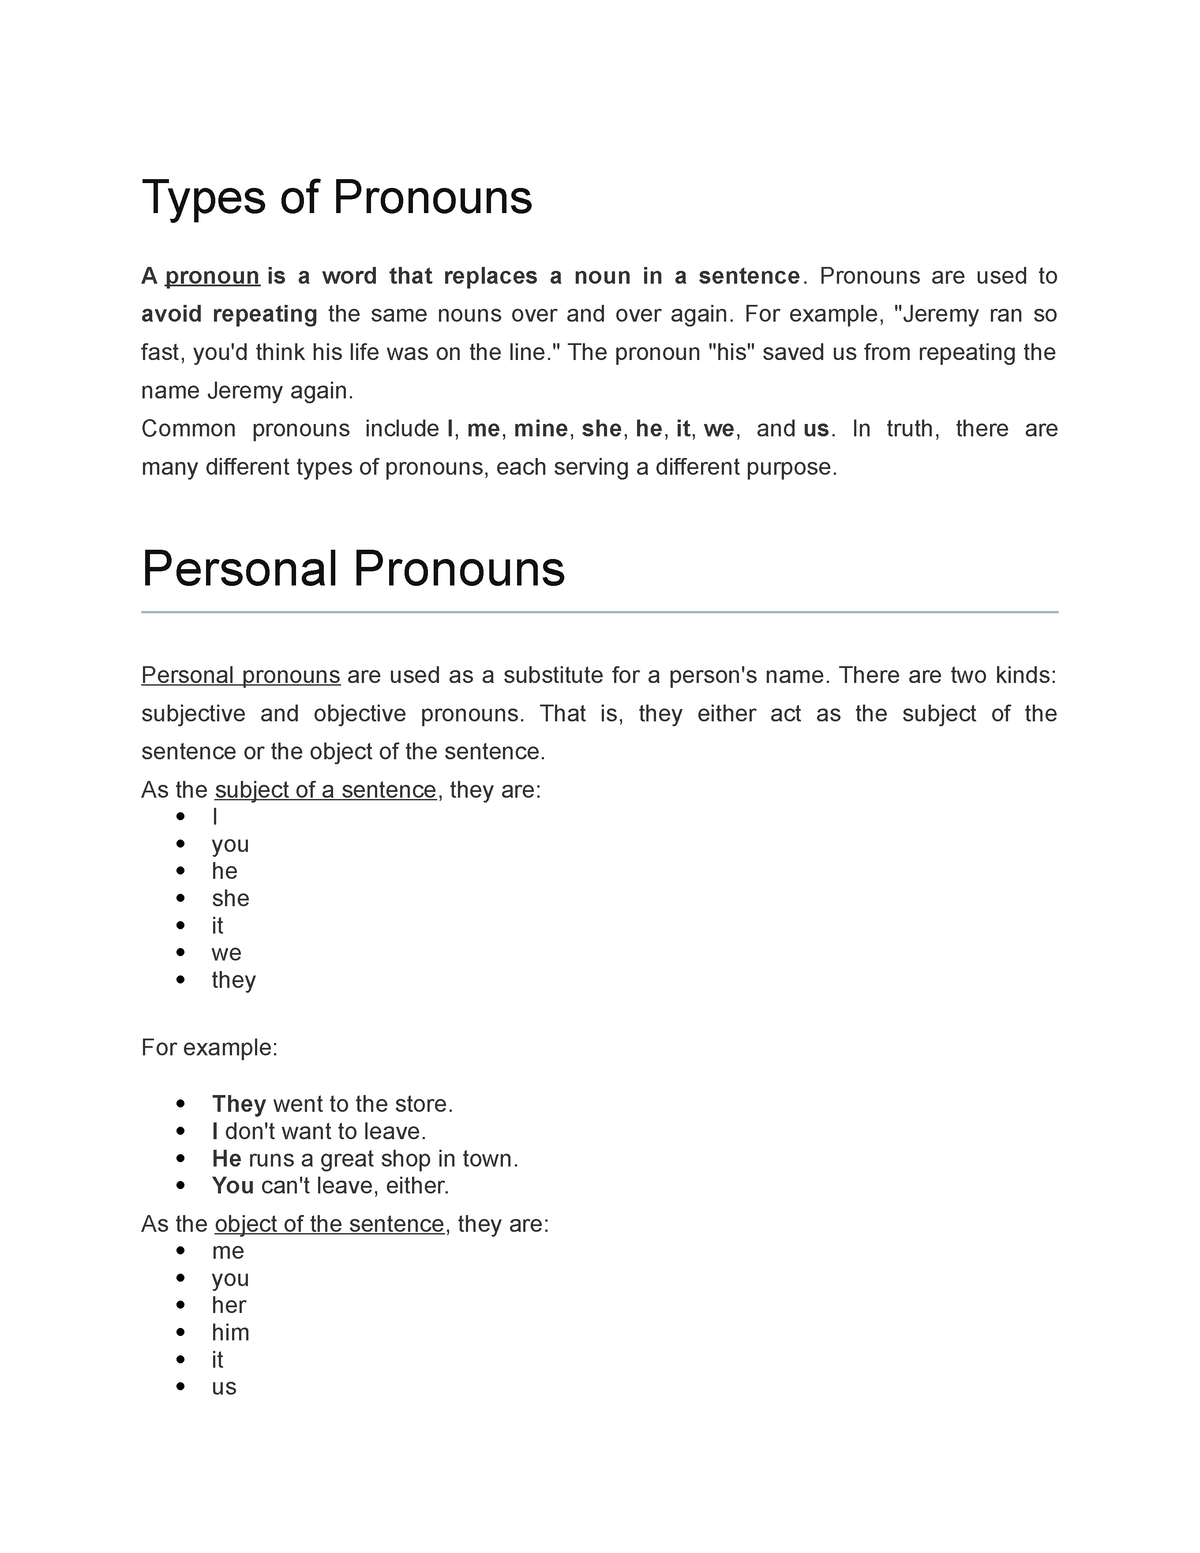 types-of-pronouns-lect-4-types-of-pronouns-a-pronoun-is-a-word-that